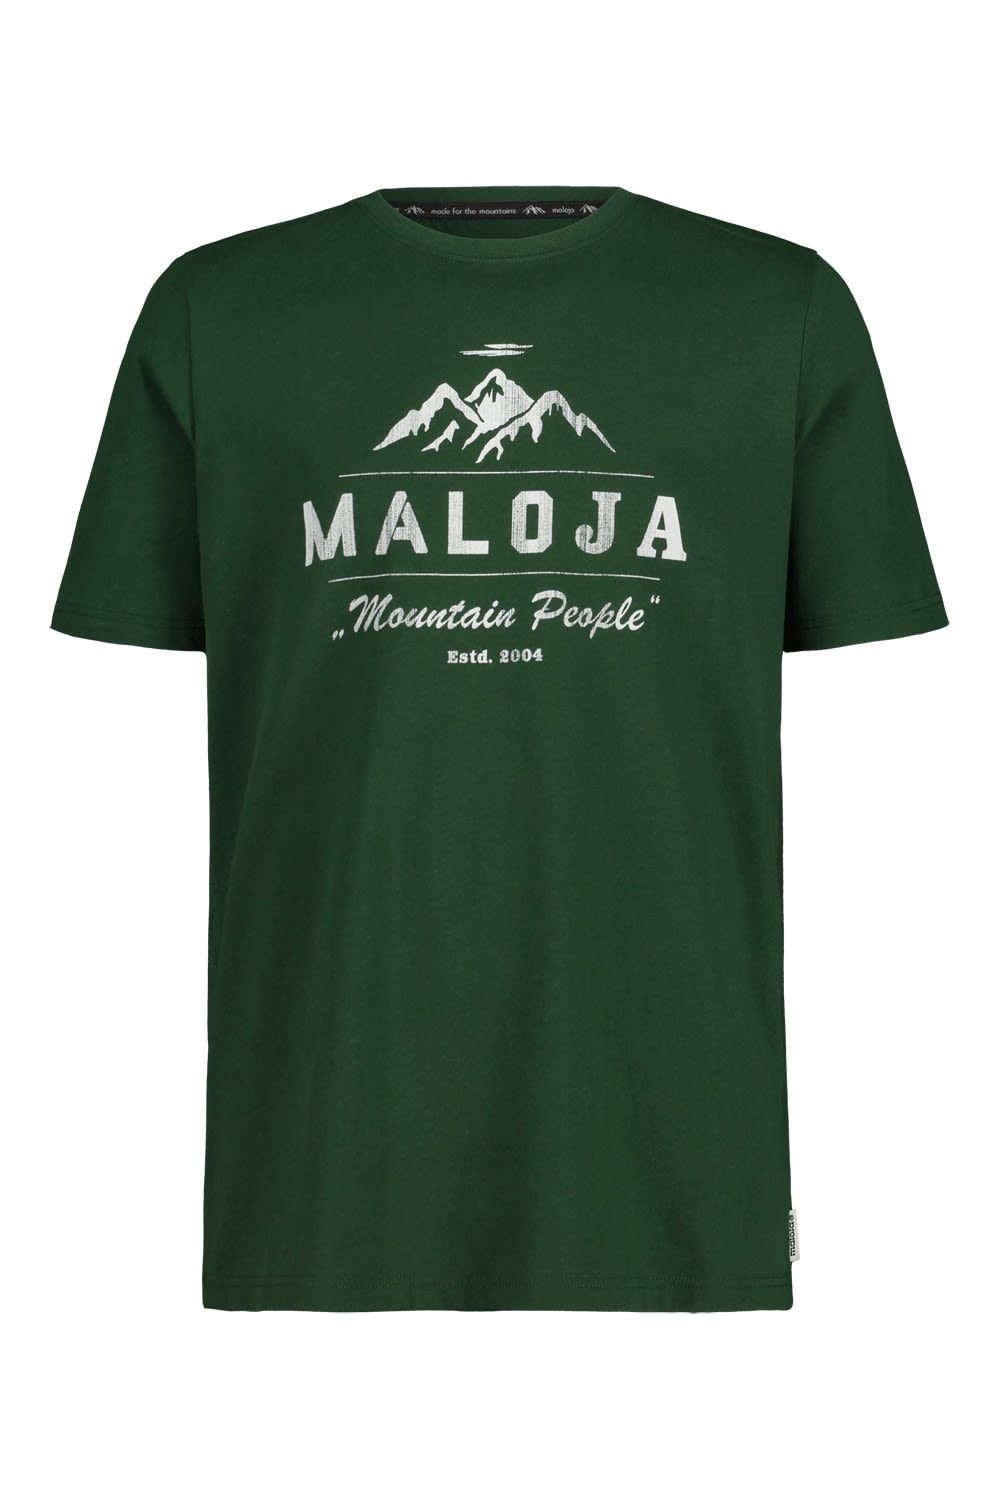 Maloja T-Shirt Maloja M Ifenm. T-shirt Herren Kurzarm-Shirt Fir